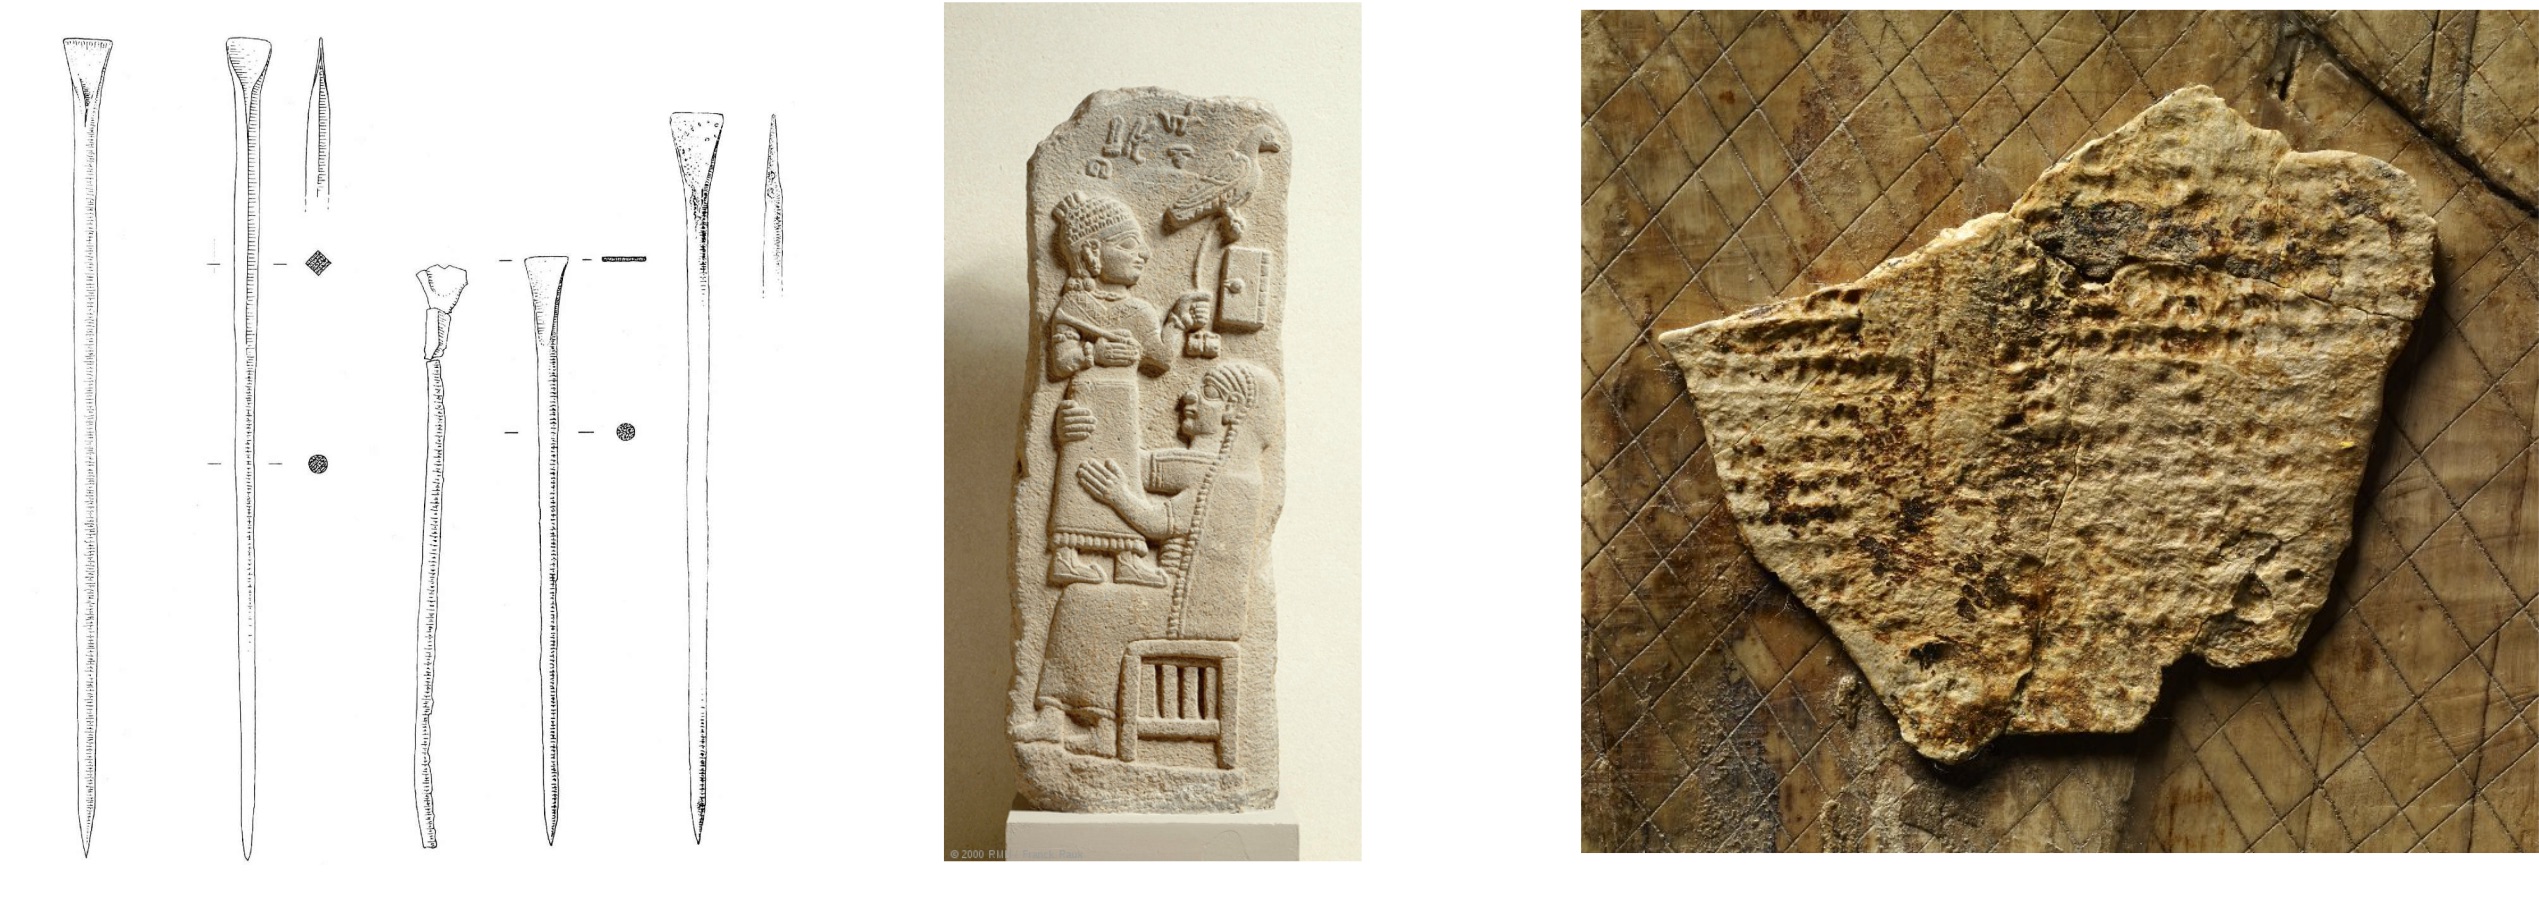 bronze styli, tarhunpiyas stela, nimrud tablet